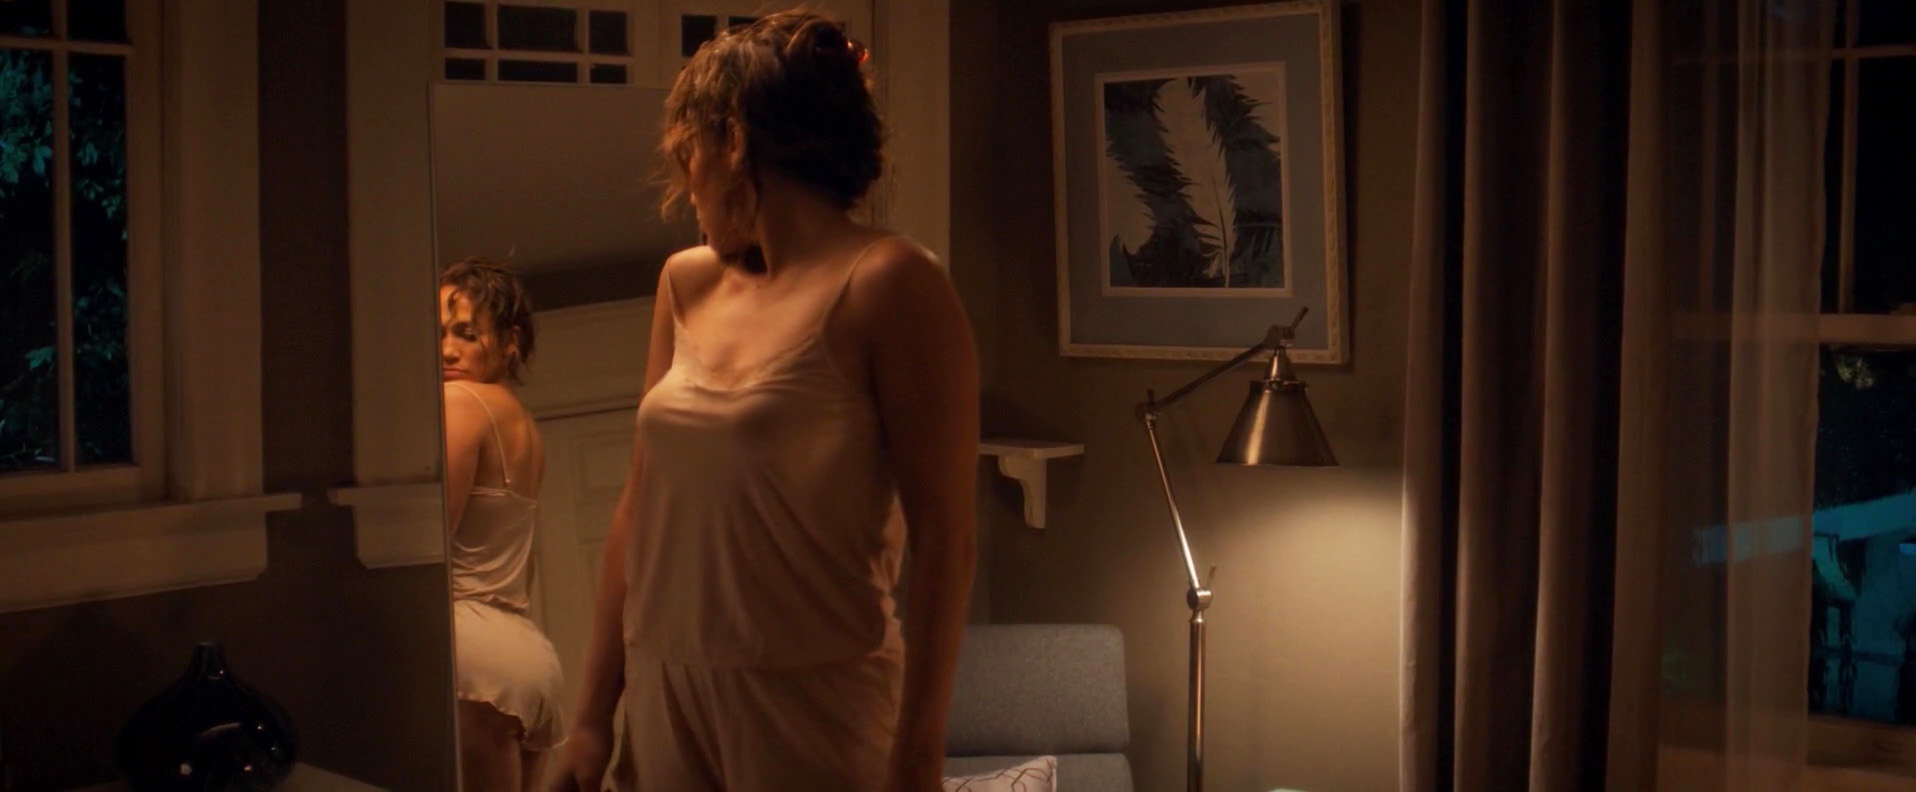 Jennifer Lopez, Lexi Atkins - The Boy Next Door (2015) HD 1080p